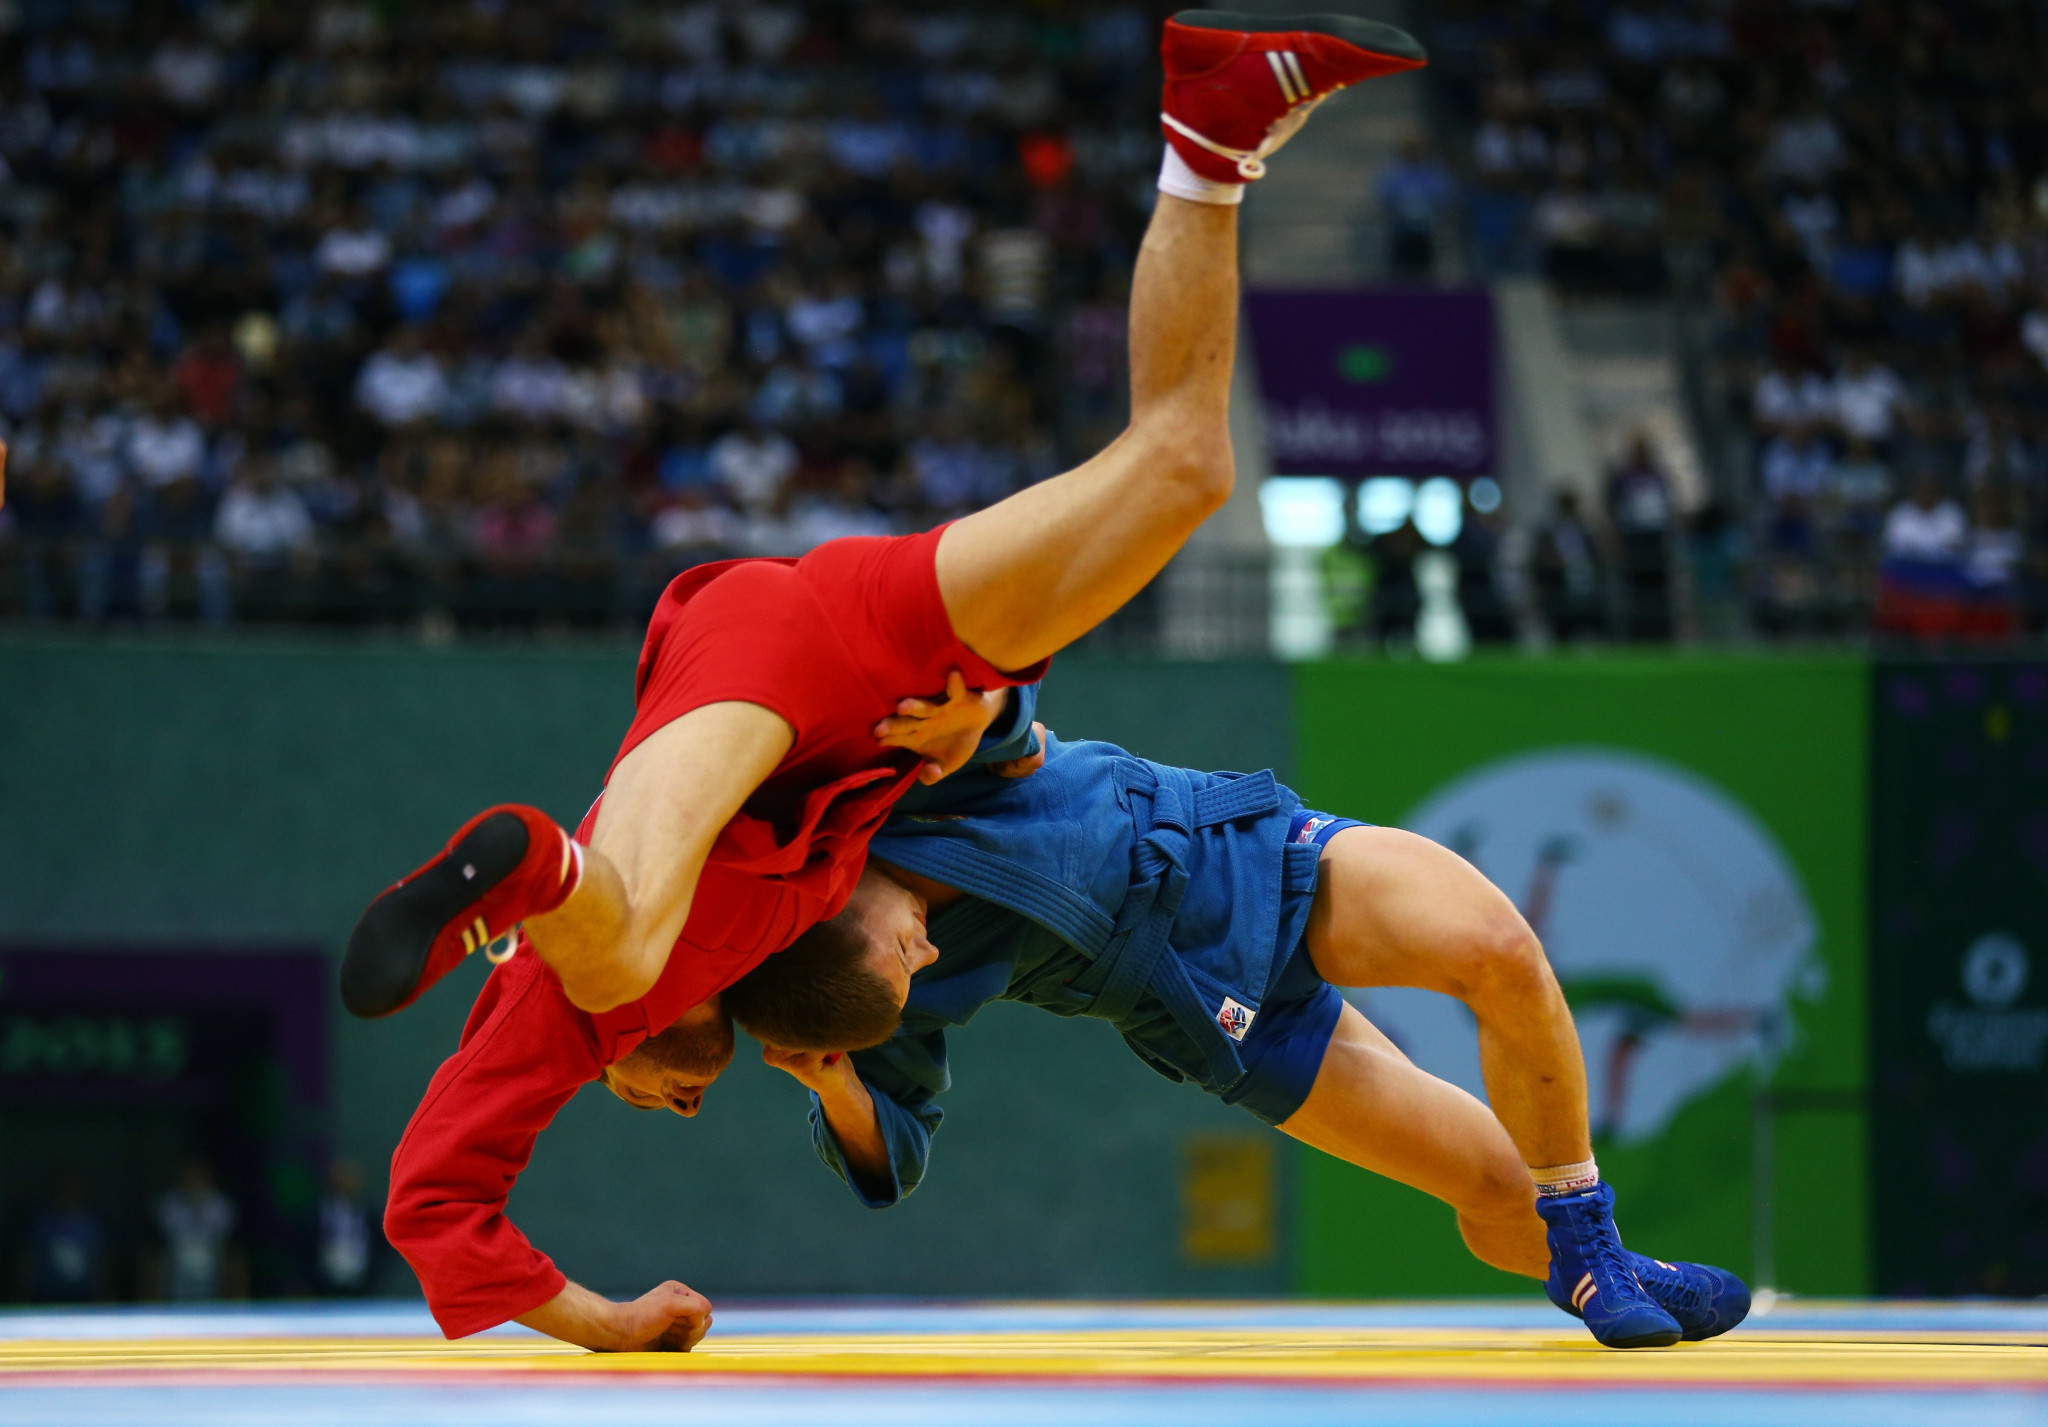  Sambo athletes at European Championships in Haifa earn high praise